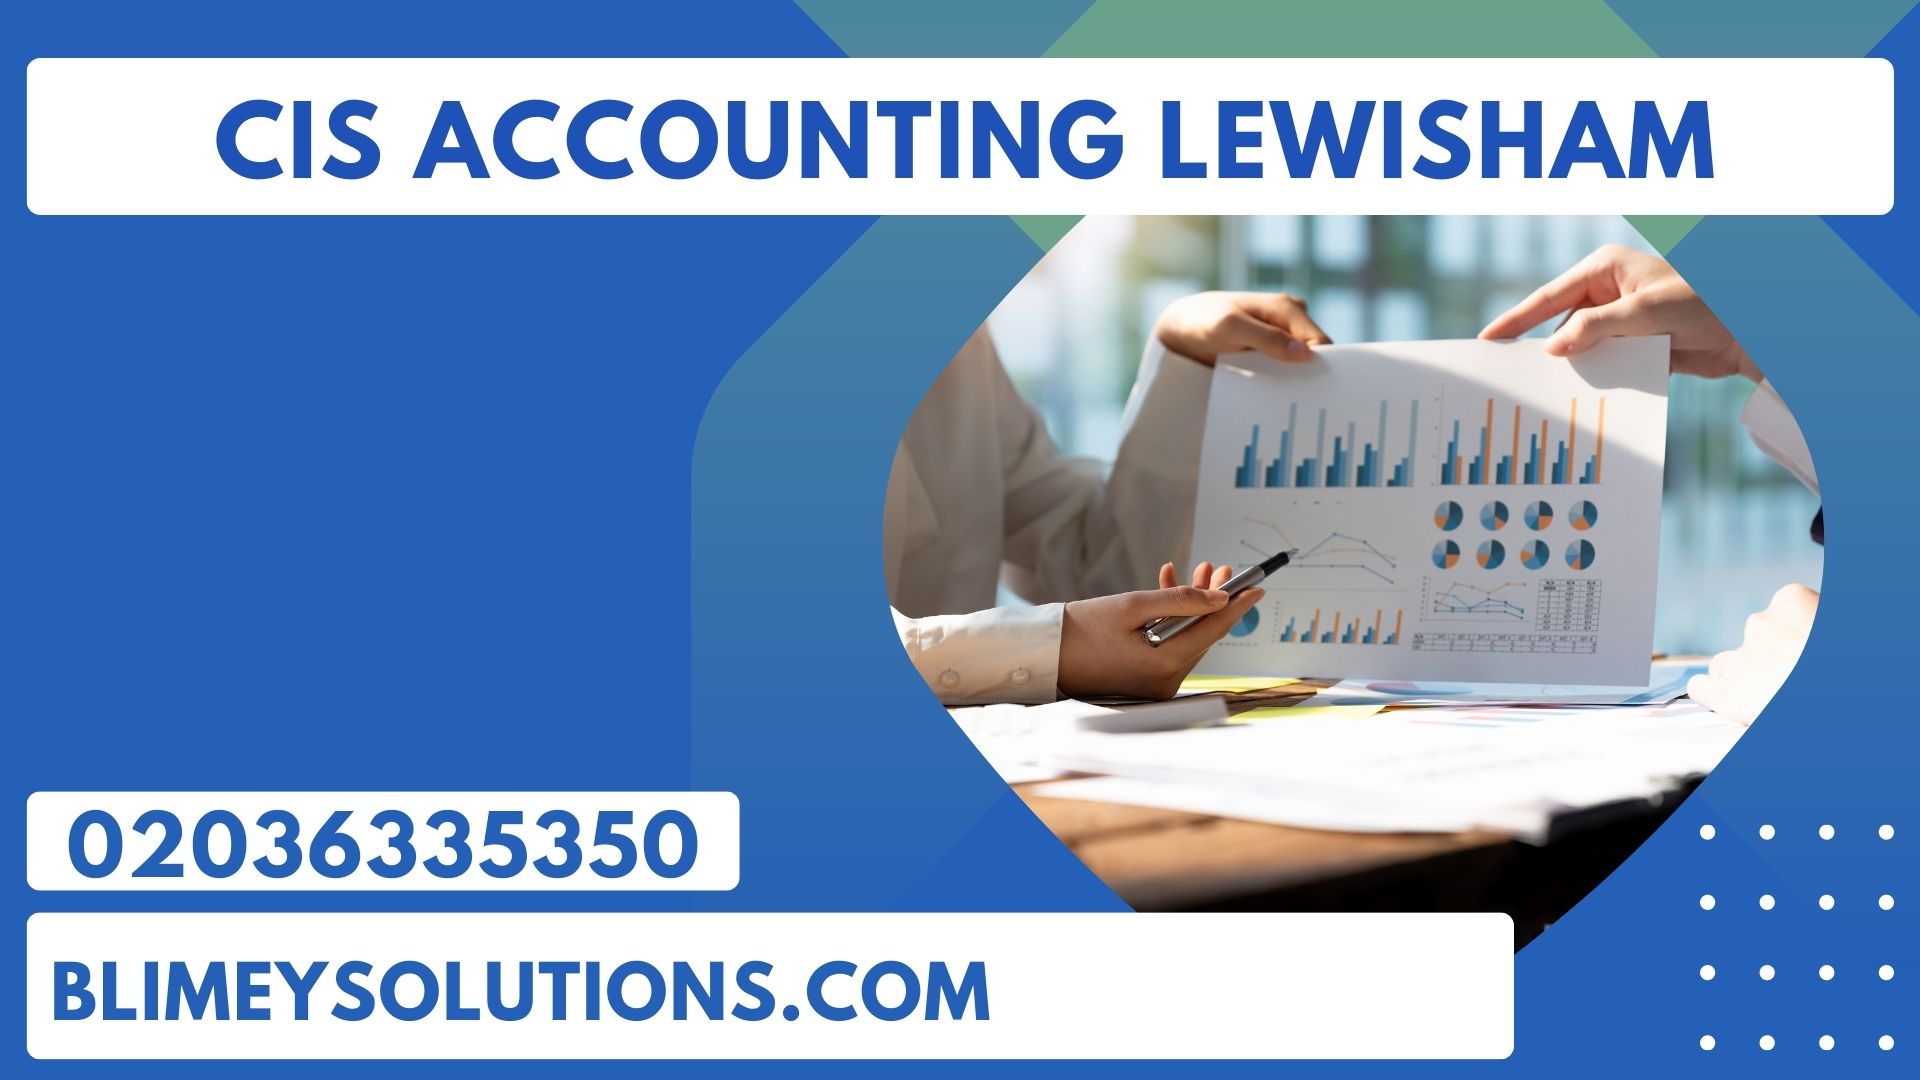 CIS Accounting in Lewisham SE13 London